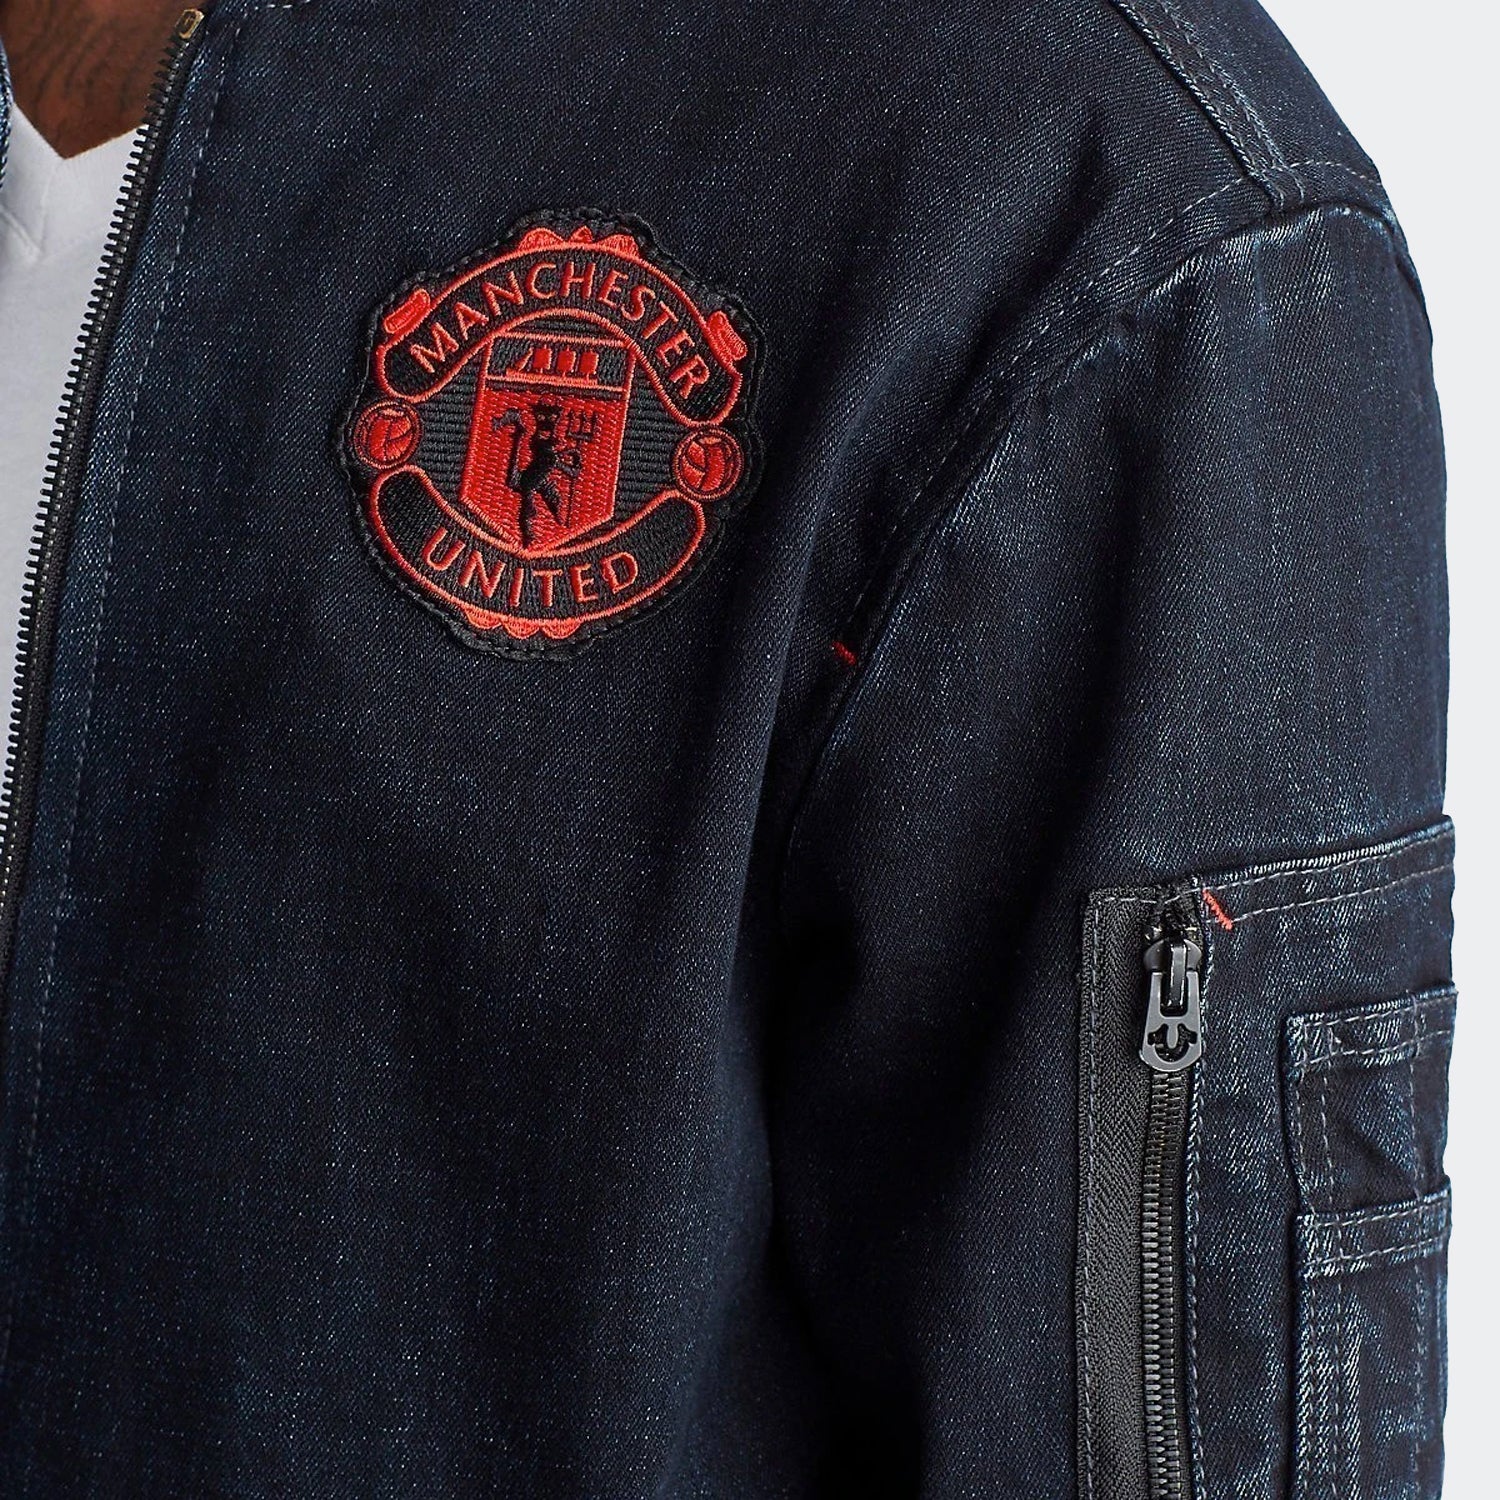 True Religion Manchester United Kids Denim Jean Jacket Embroidered Blue Red  Sz 4 | eBay